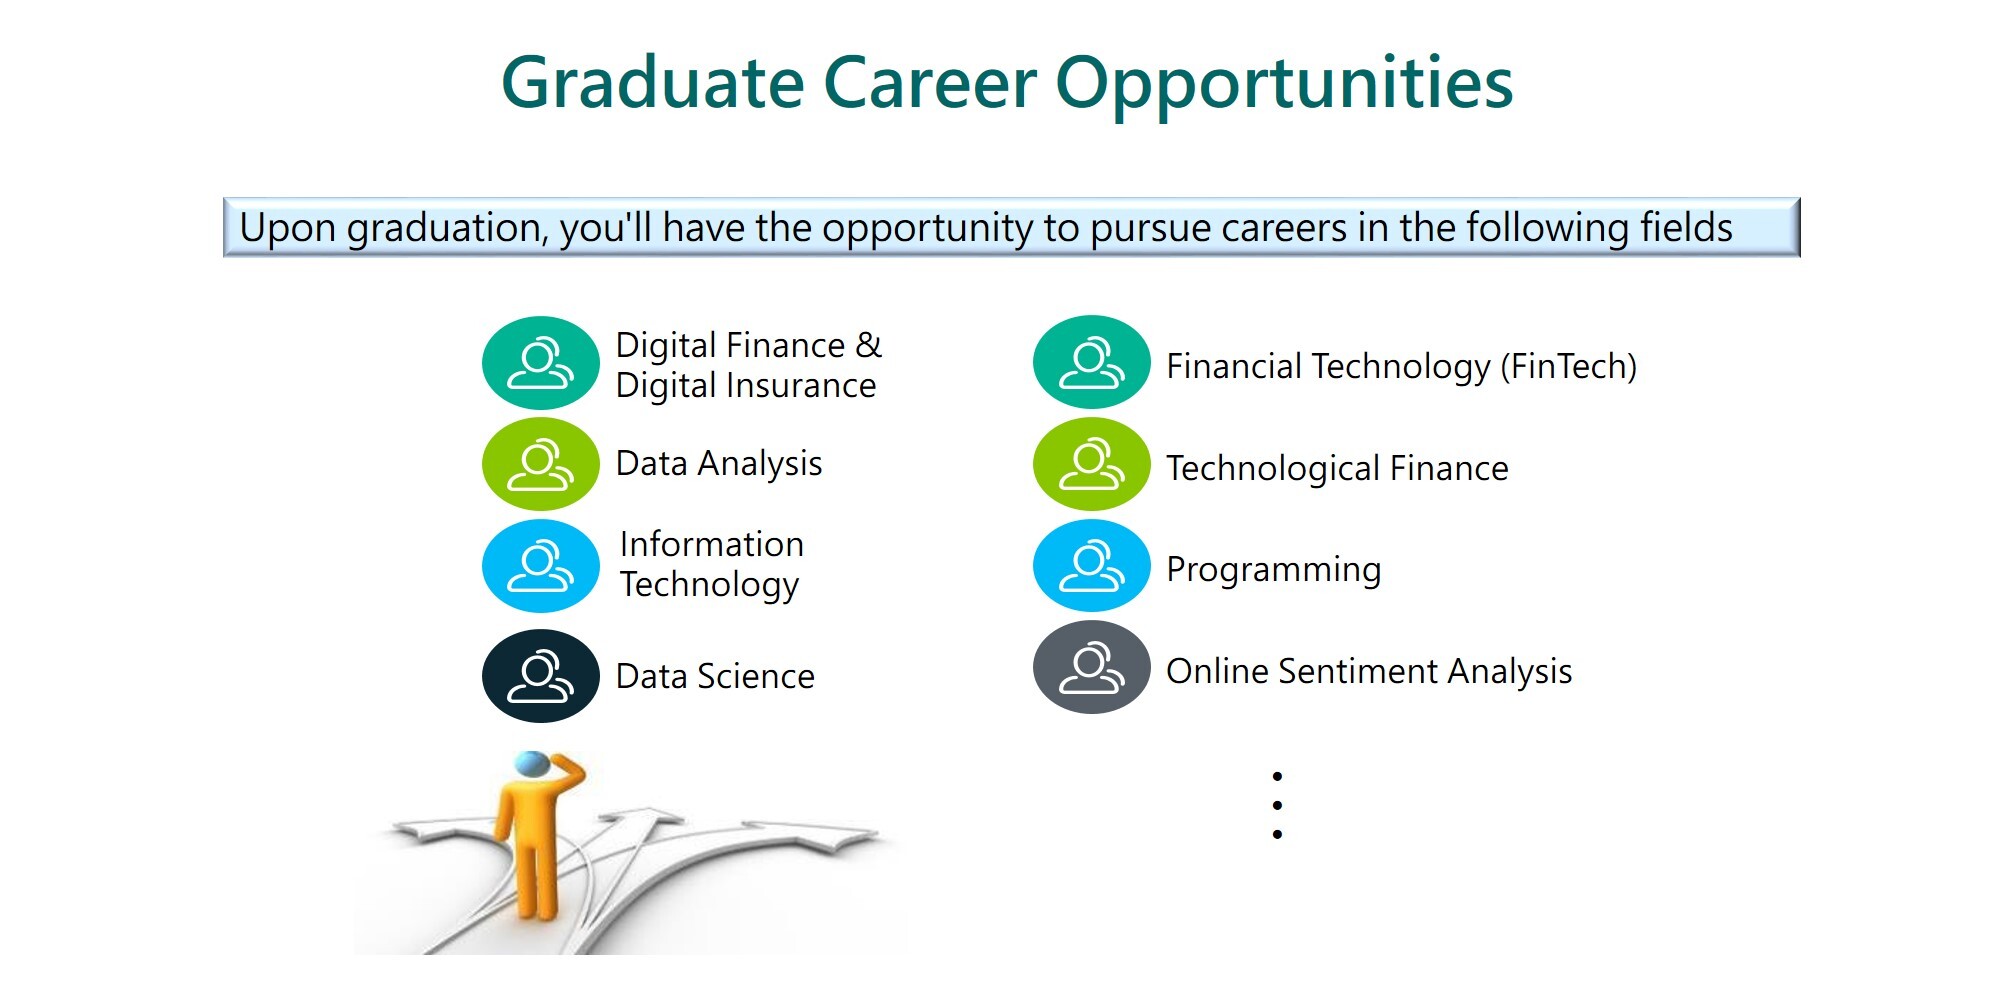 Graduate Career Opportunities